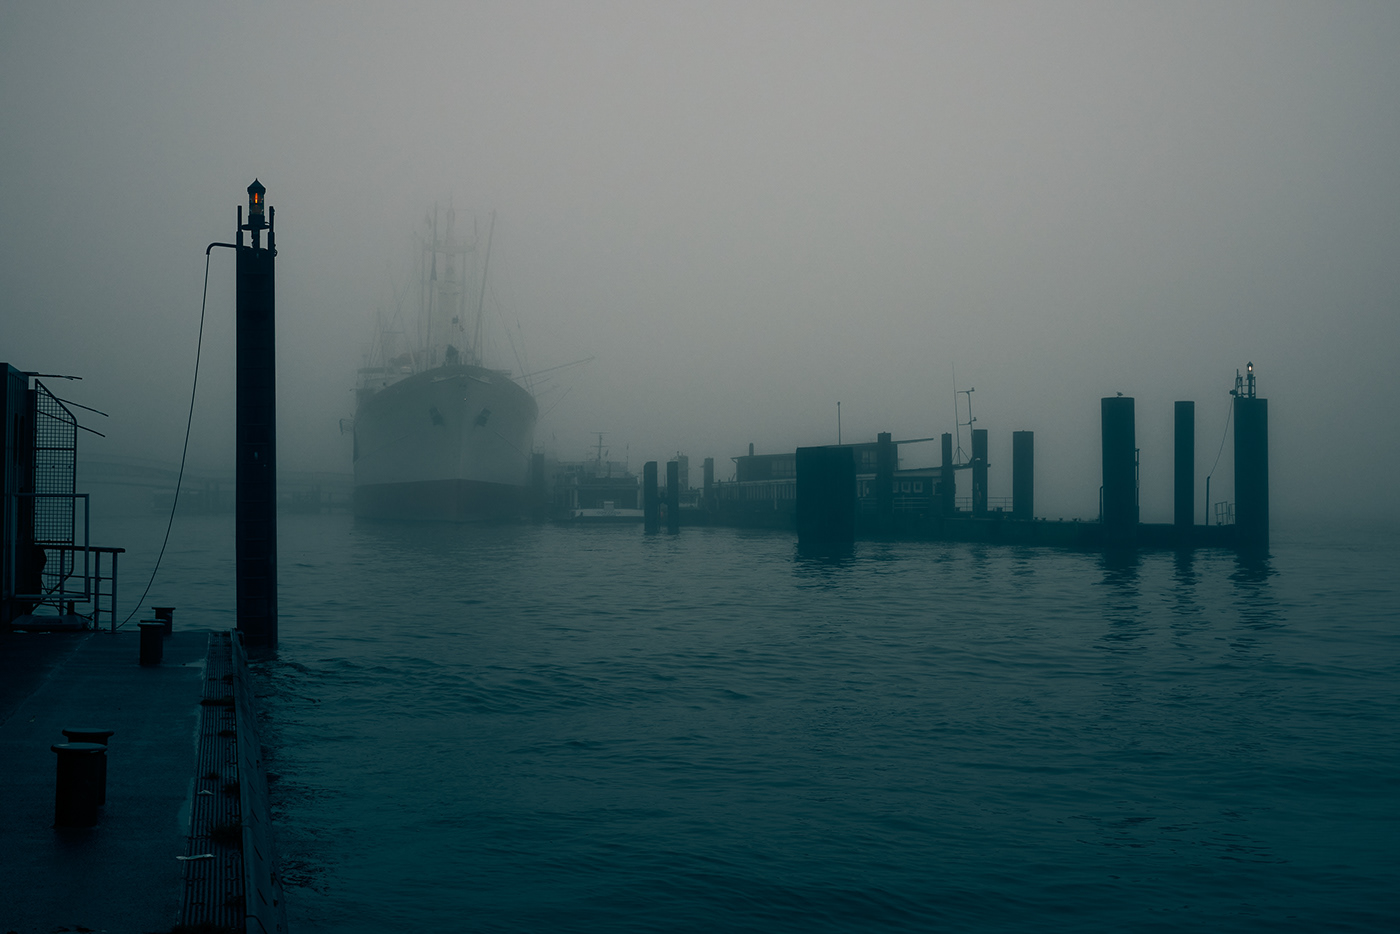 docks elbe fog hamburg harbour mood river ship twilight water